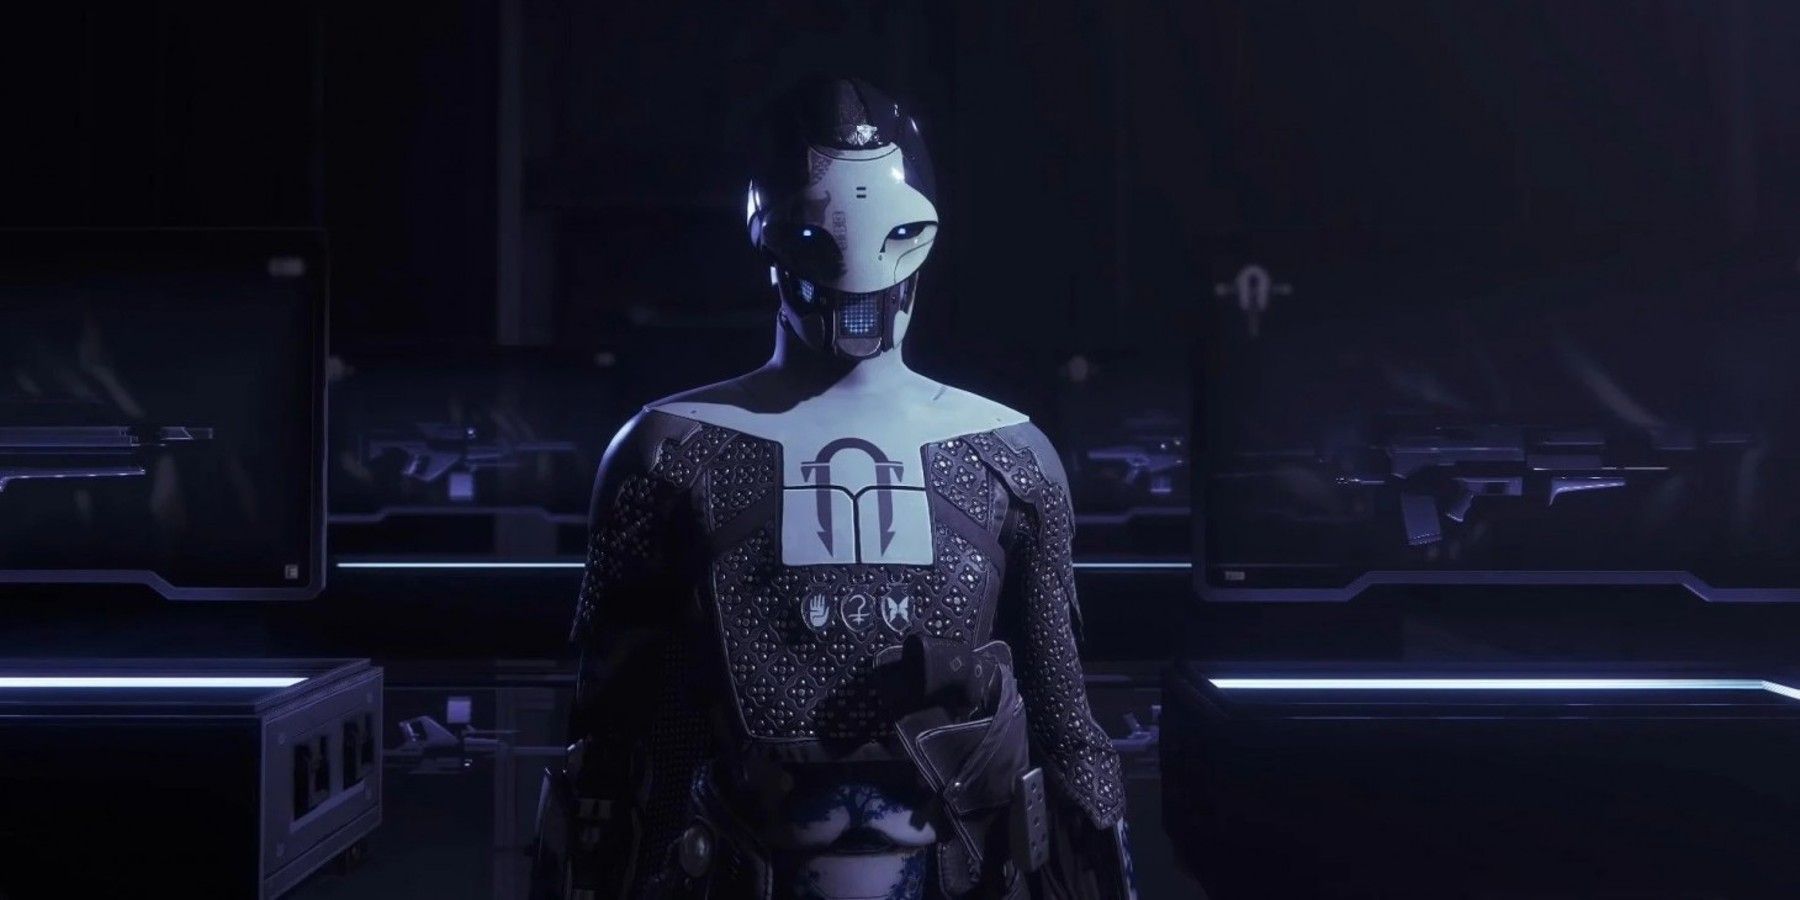 Destiny 2 Fan Art Imagines What Ada 1 Would Look Like As A Human